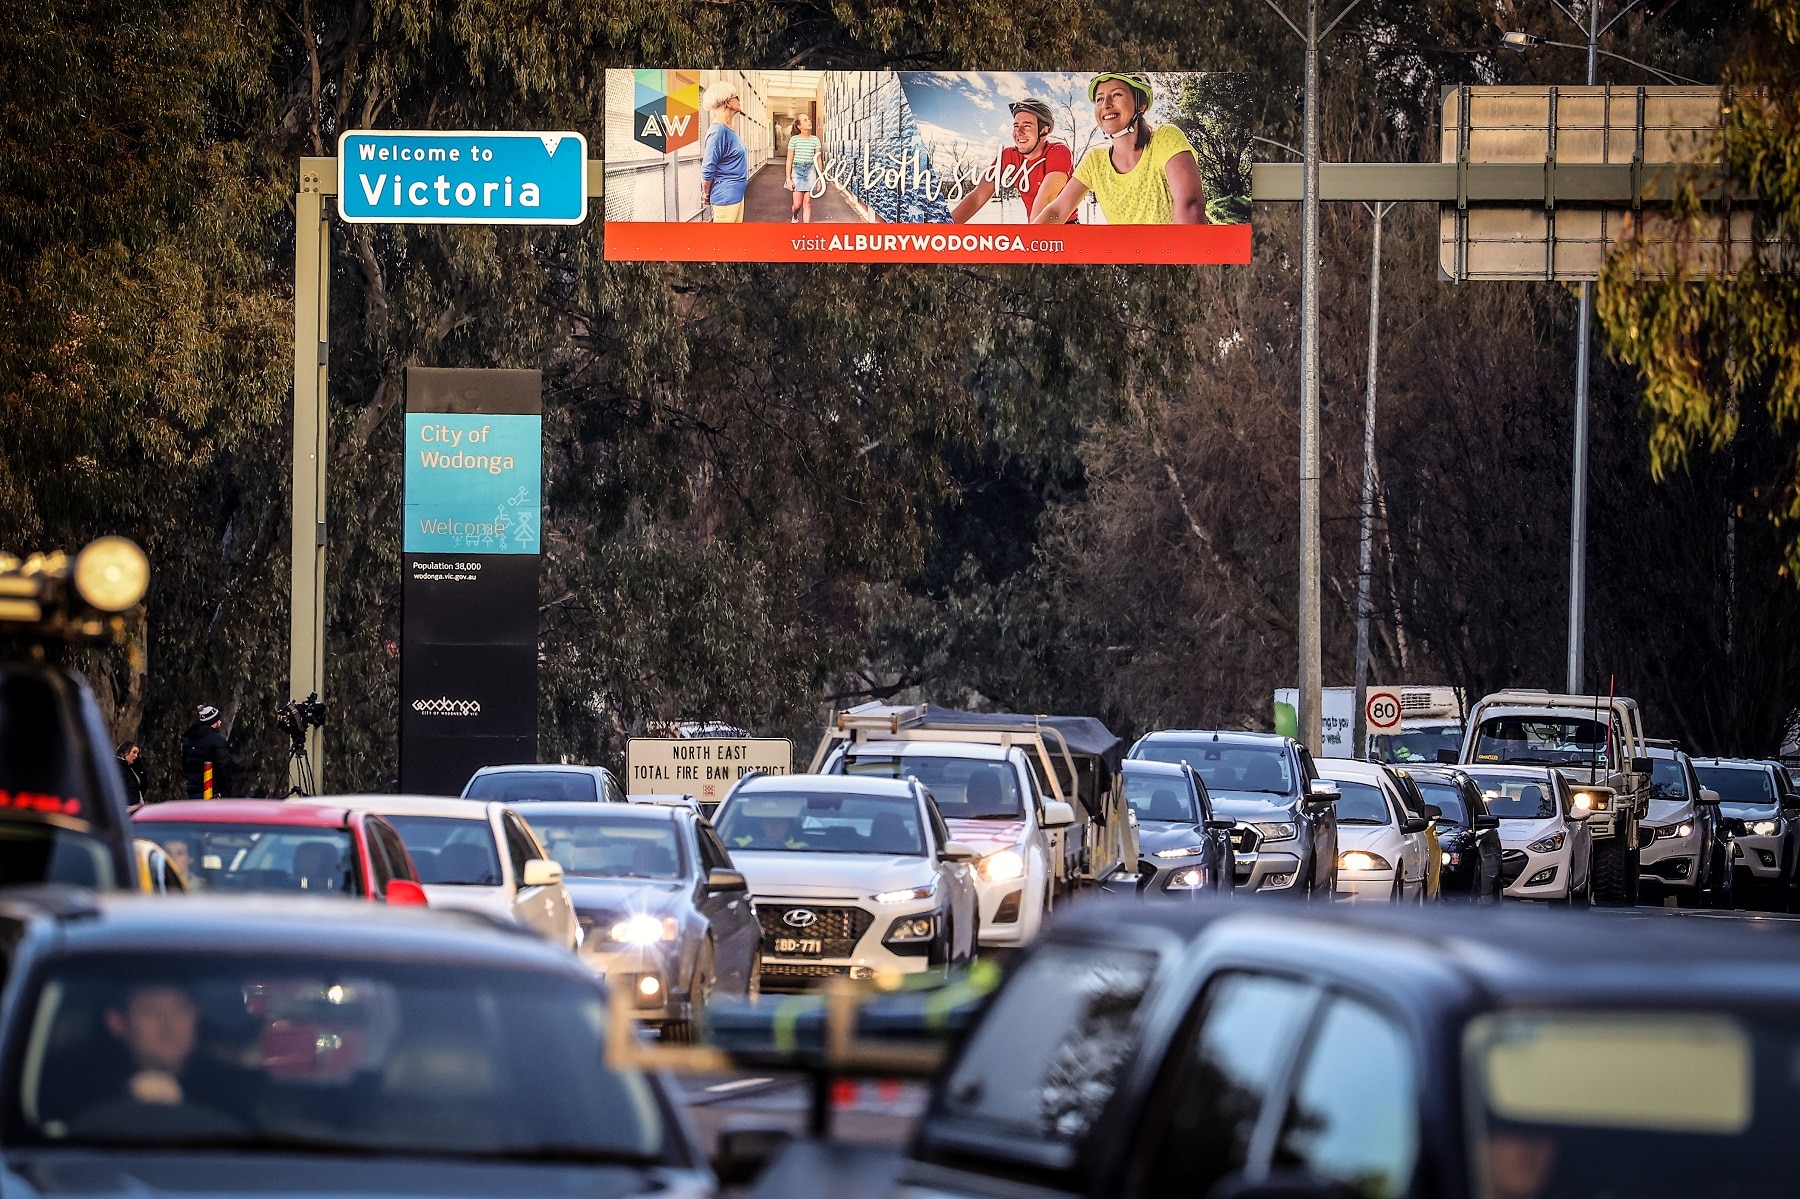 NSW And Victoria Prepare For Hard Border Closures To Come Into Effect To Stop COVID-19 Spread